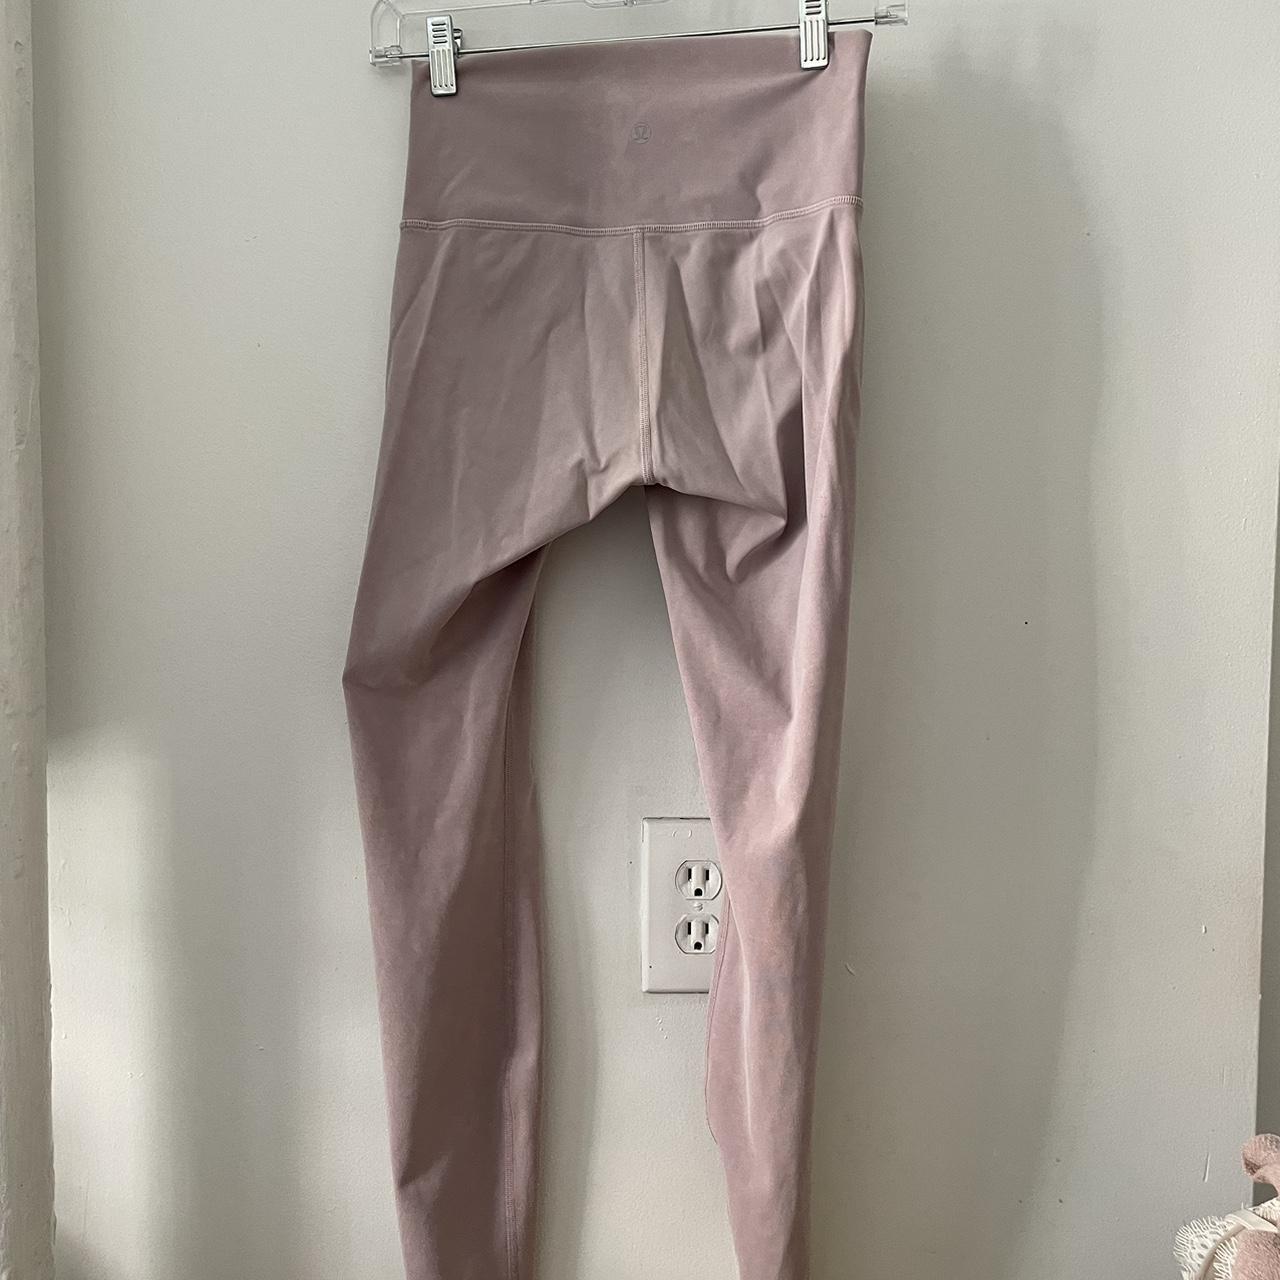 Lululemon size 6 hot pink leggings- great condition, - Depop